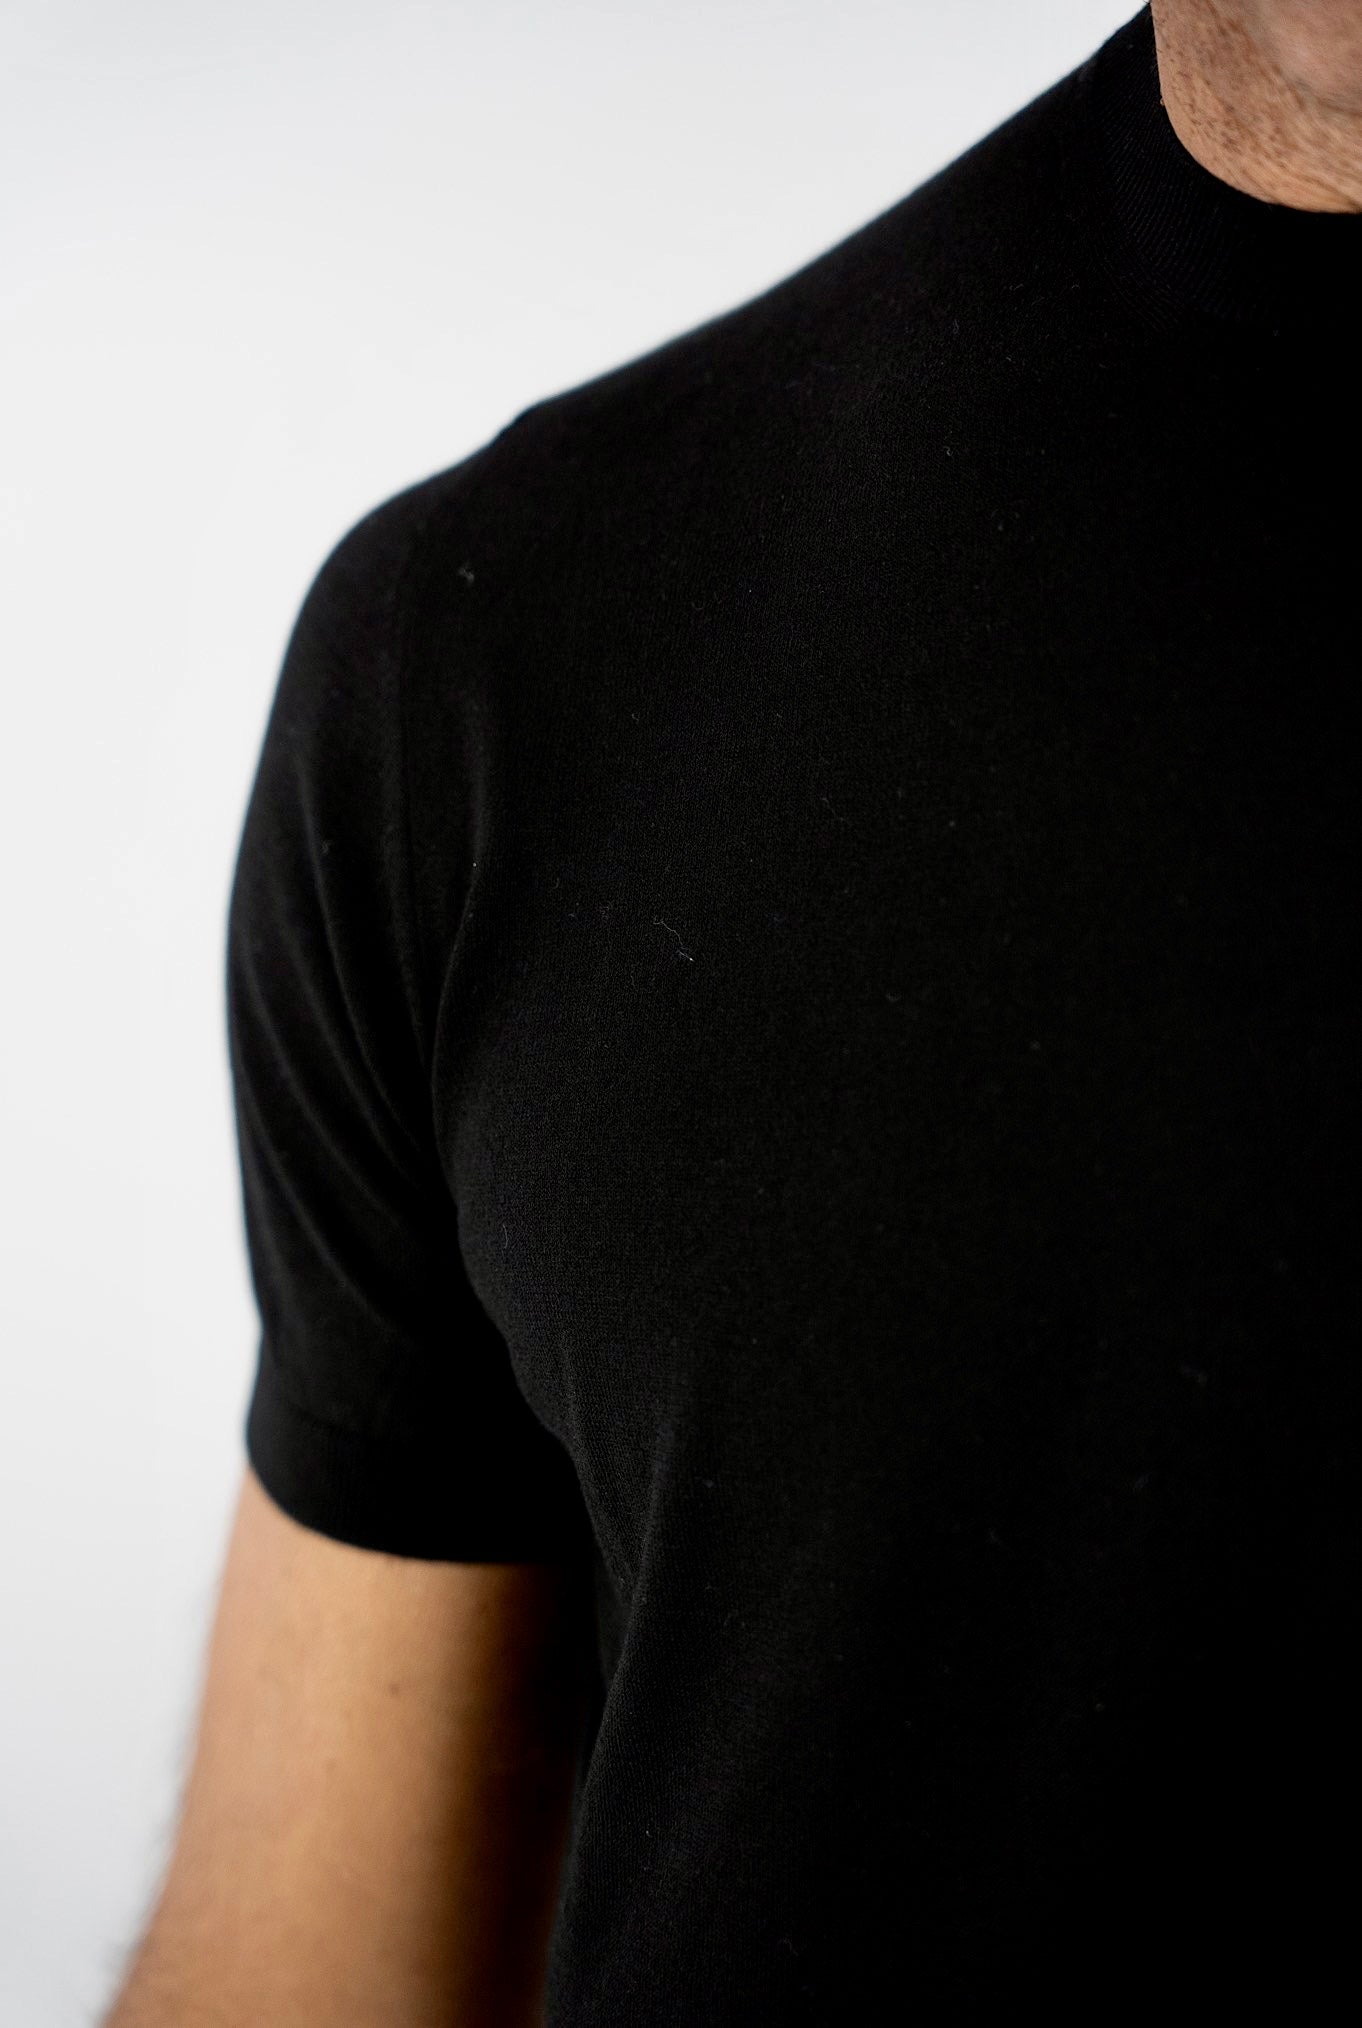 GUARINO Black Cotton Short Sleeves Round Neck Shirt